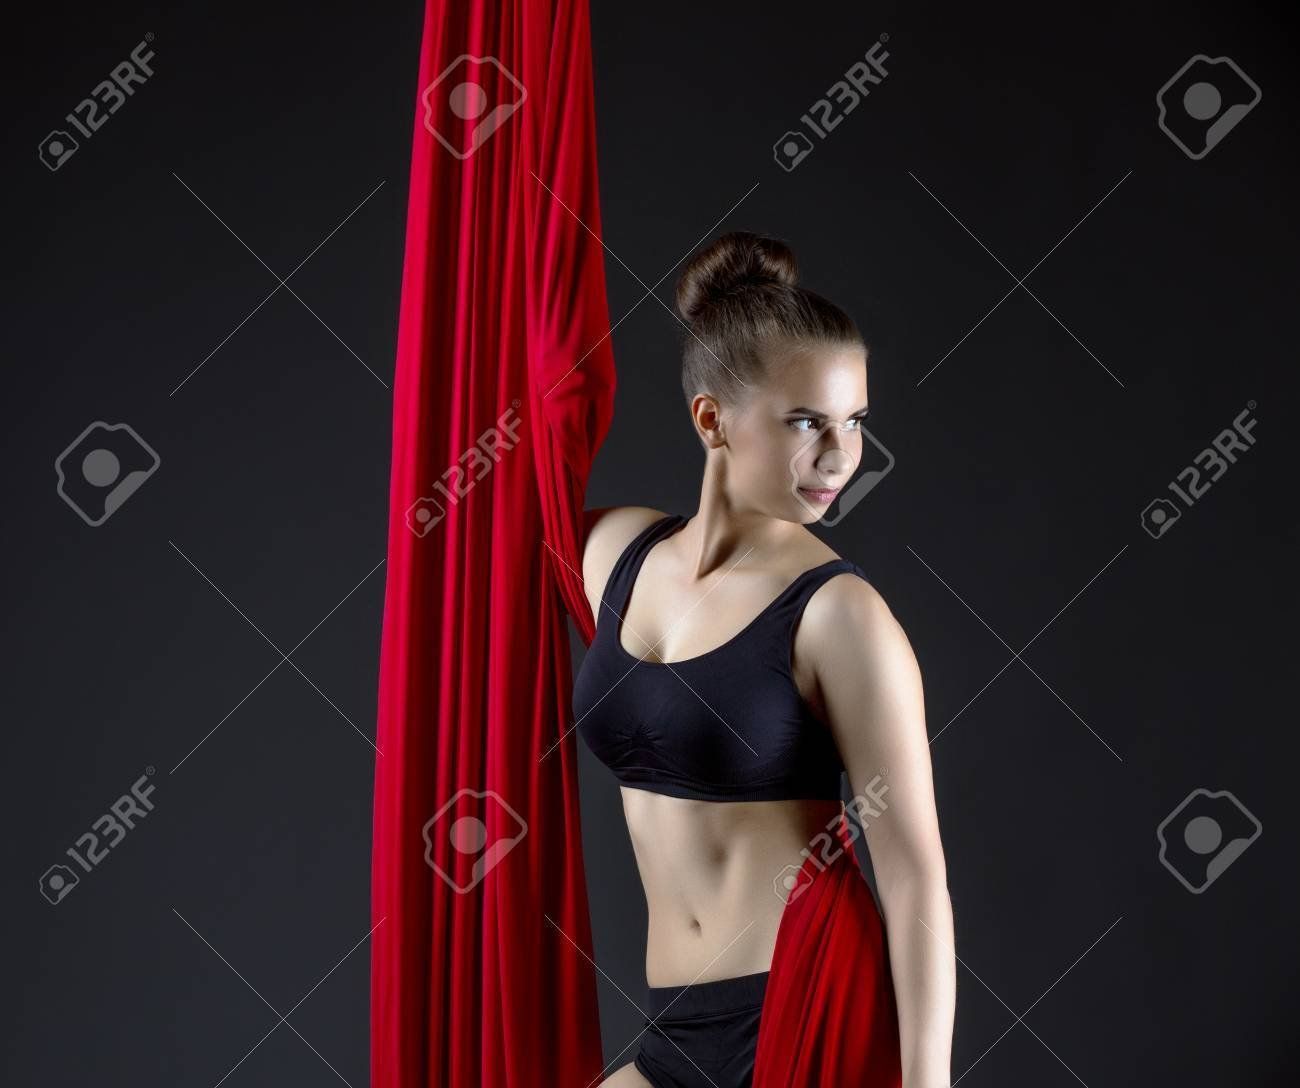 Busty female acrobats